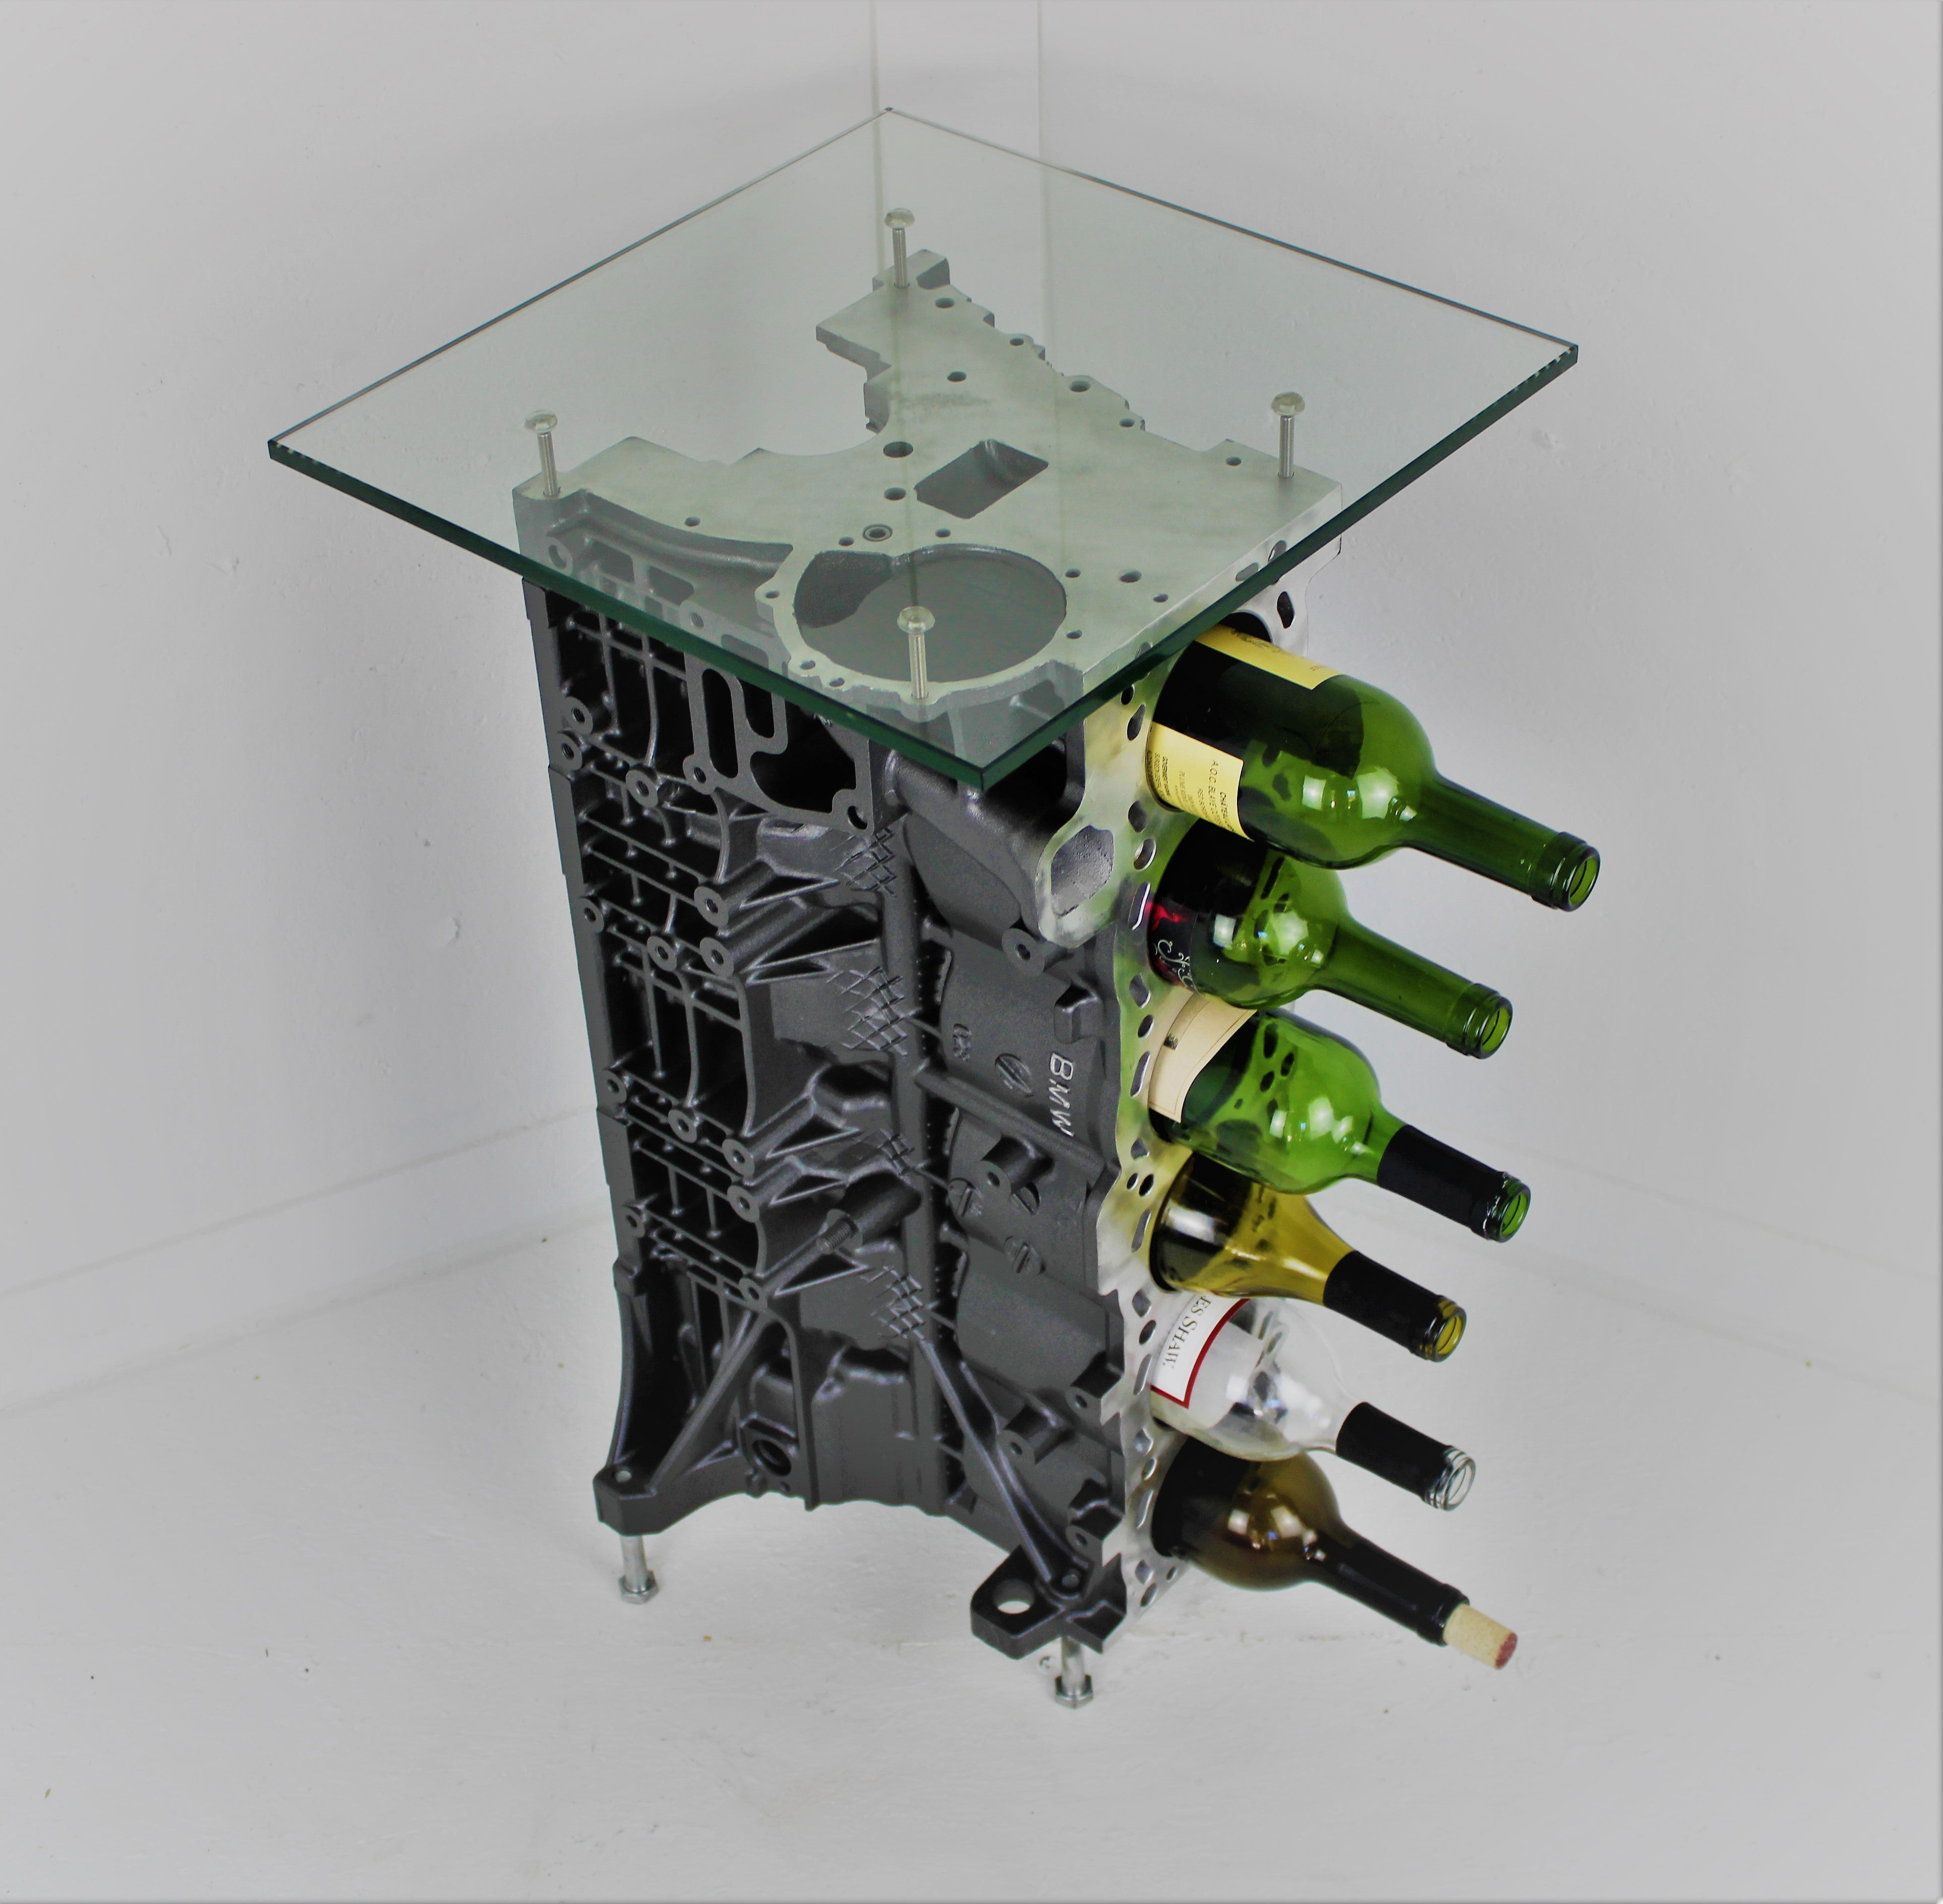 BMW Table Wine Rack - BMW Engine End Table Bottle Storage